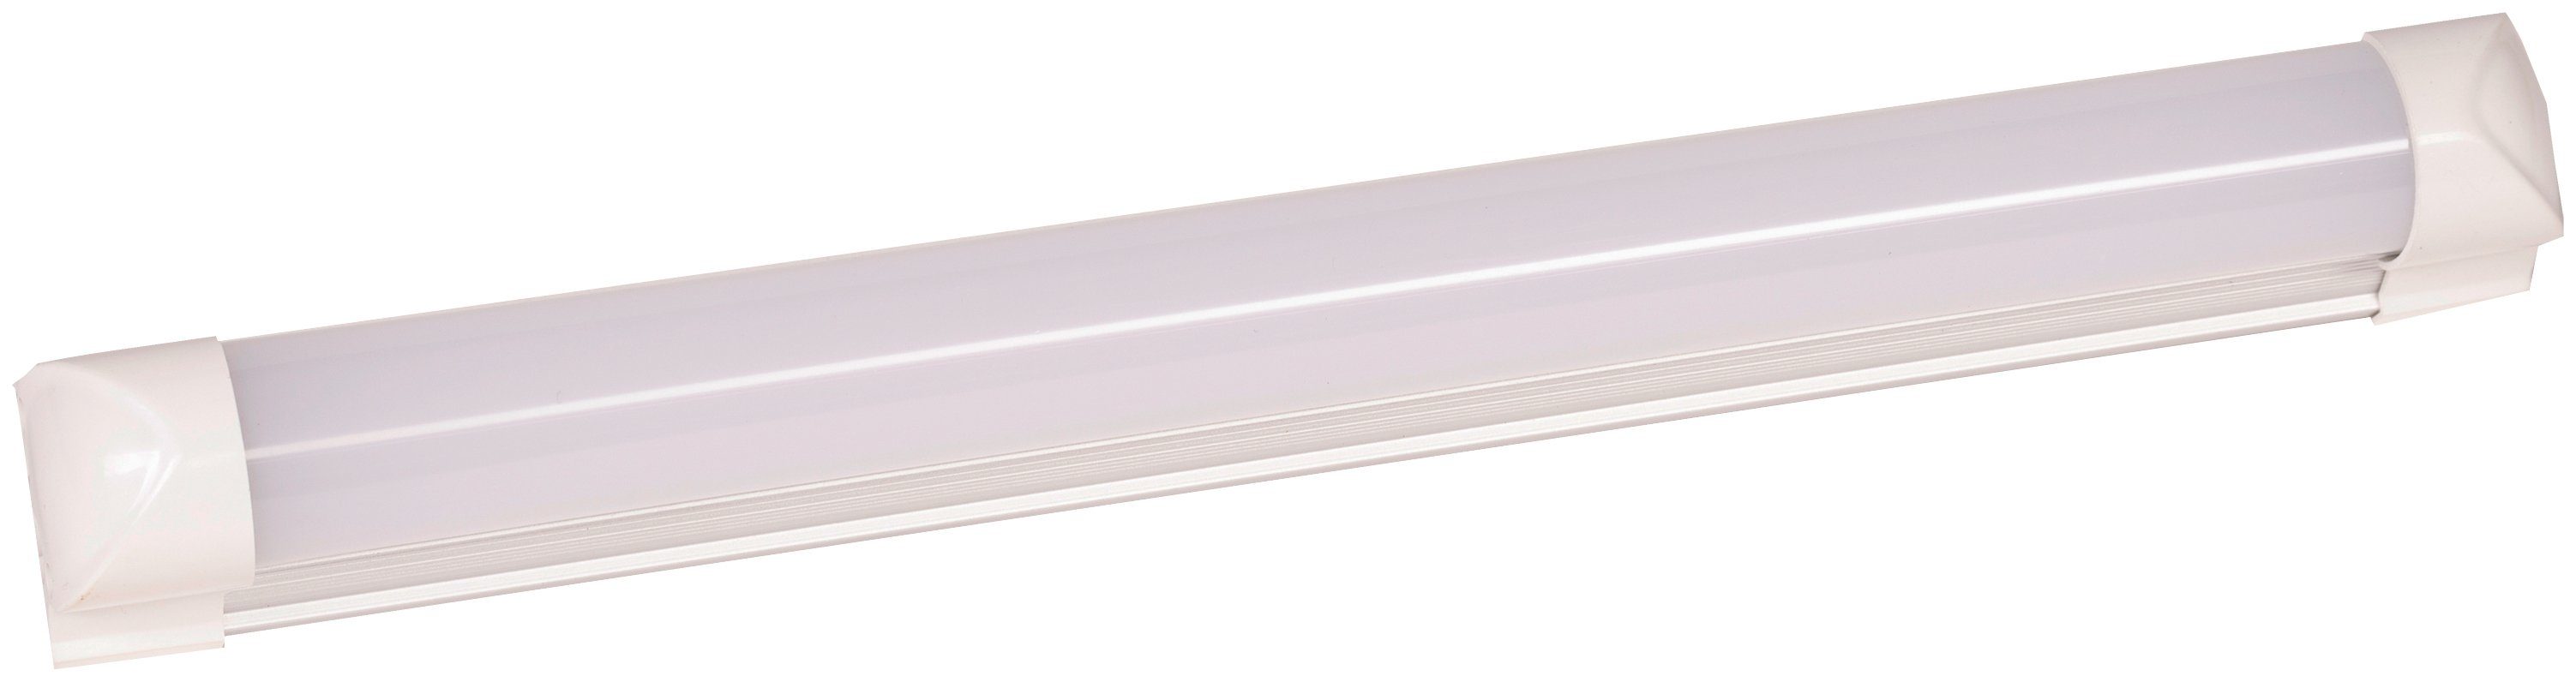 Phaesun LED Arbeitsleuchte Unit Super Illu 3 CW, Leuchtmittel wechselbar,  Kaltweiß, 3 W